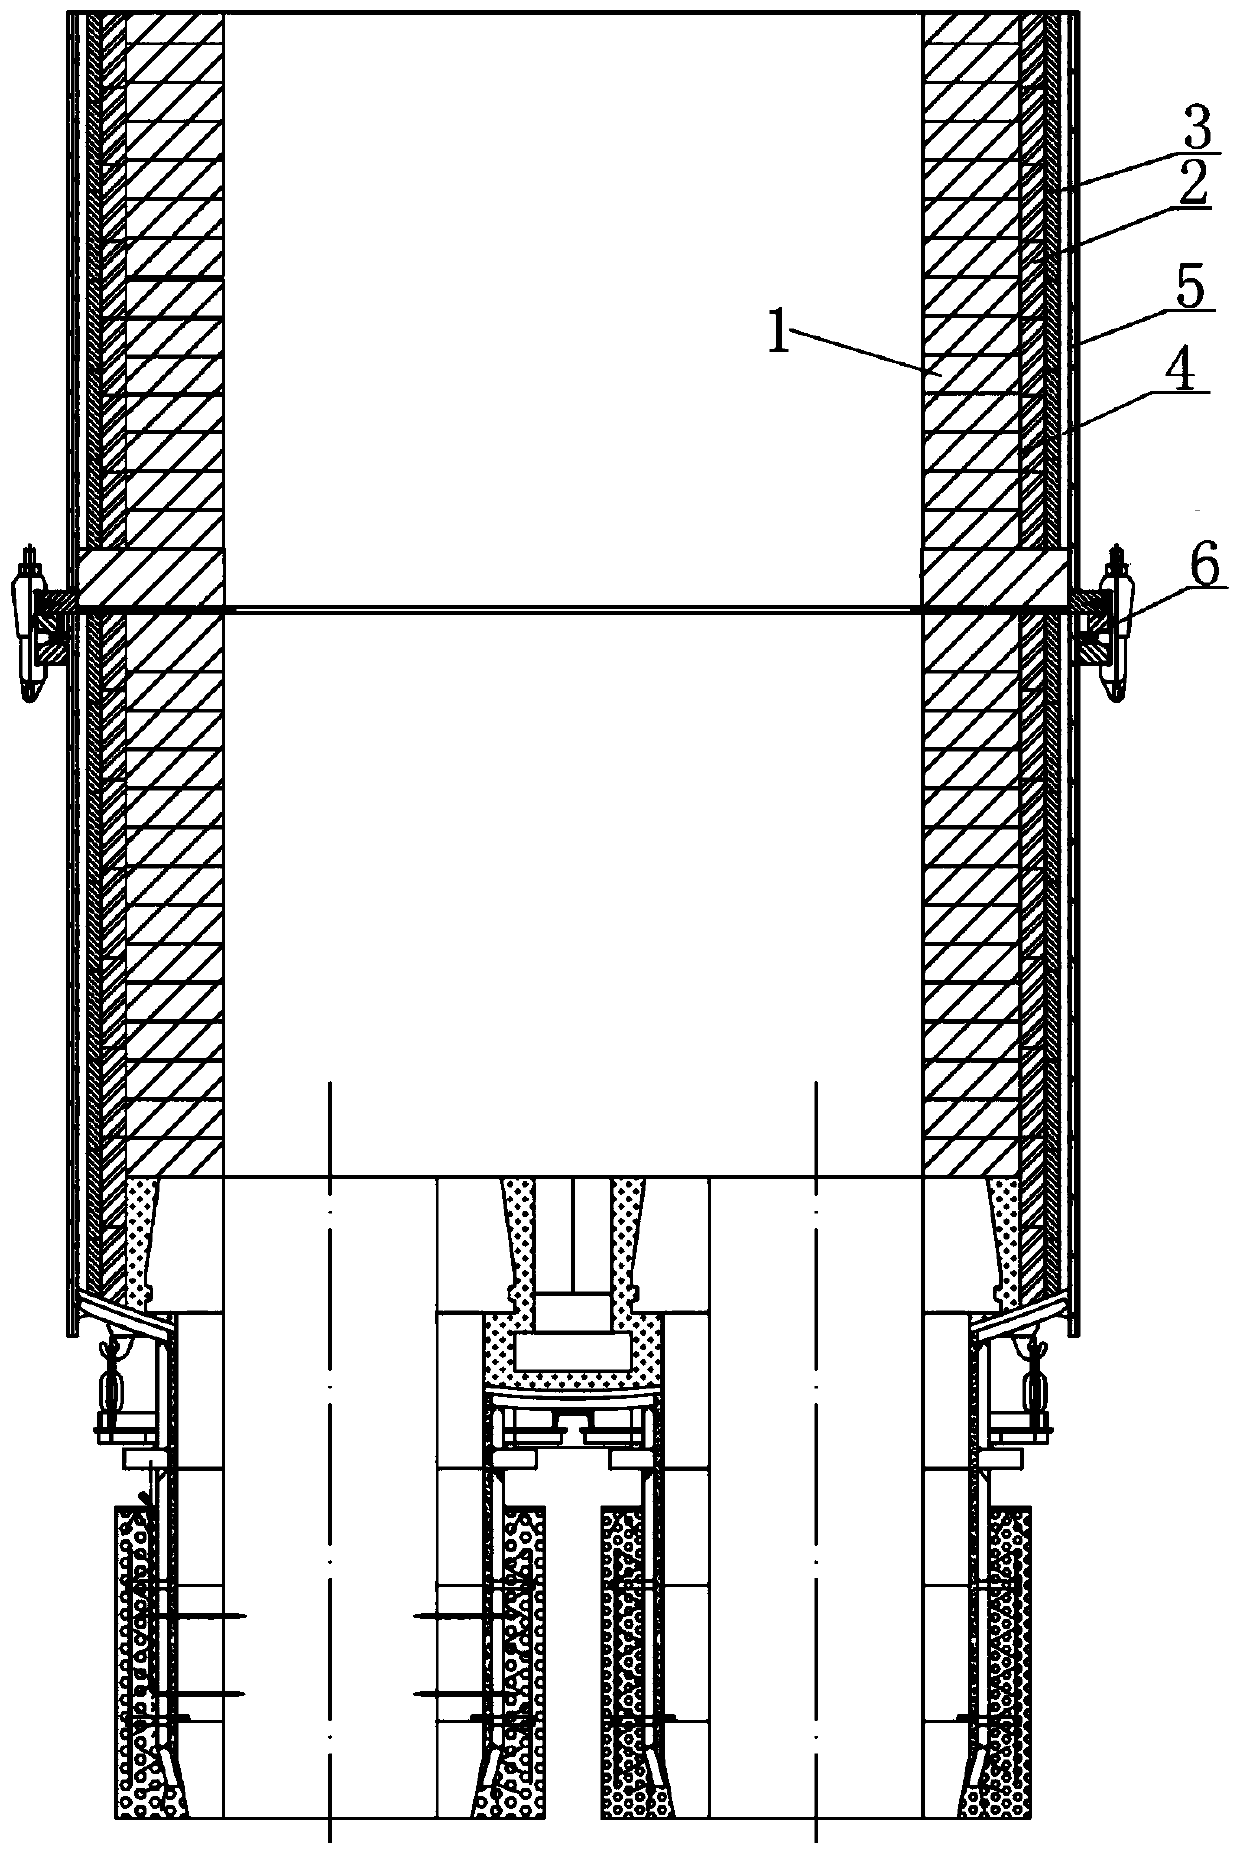 Working layer refractory brick piling structure restraining splashing and nodulation of RH vacuum tank